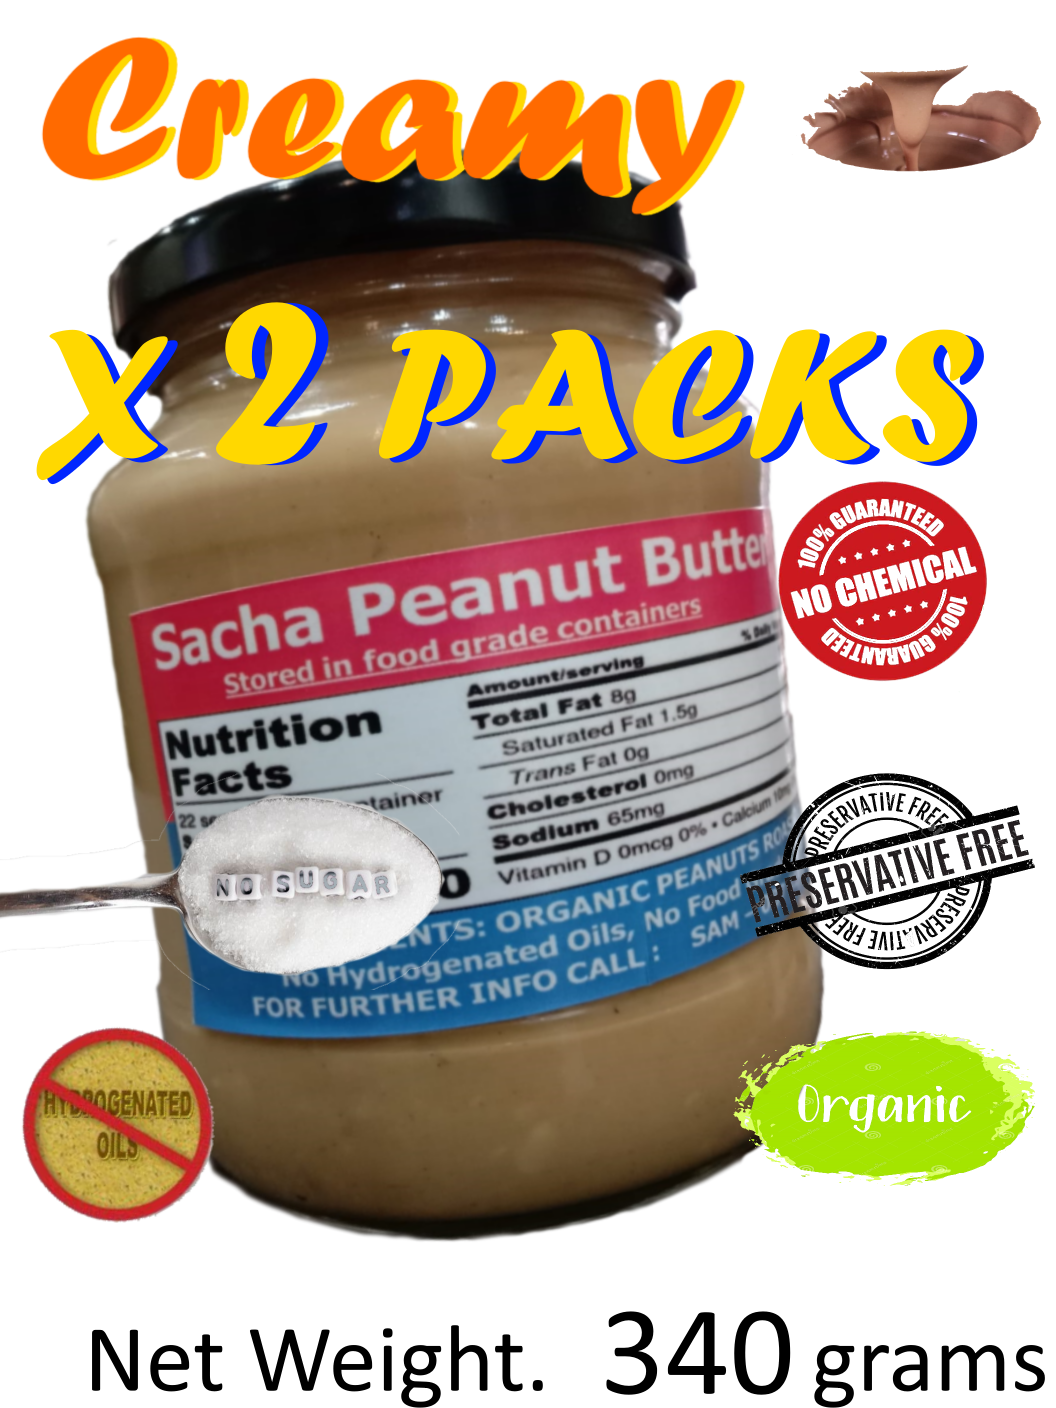 Sacha Peanut Butter (Creamy x 2 Packs) All Natural Organic (340 grams x 2 แพ็ค) - Free Delivery, ซาช่า-เนยถั่ว (ส่งฟรี)